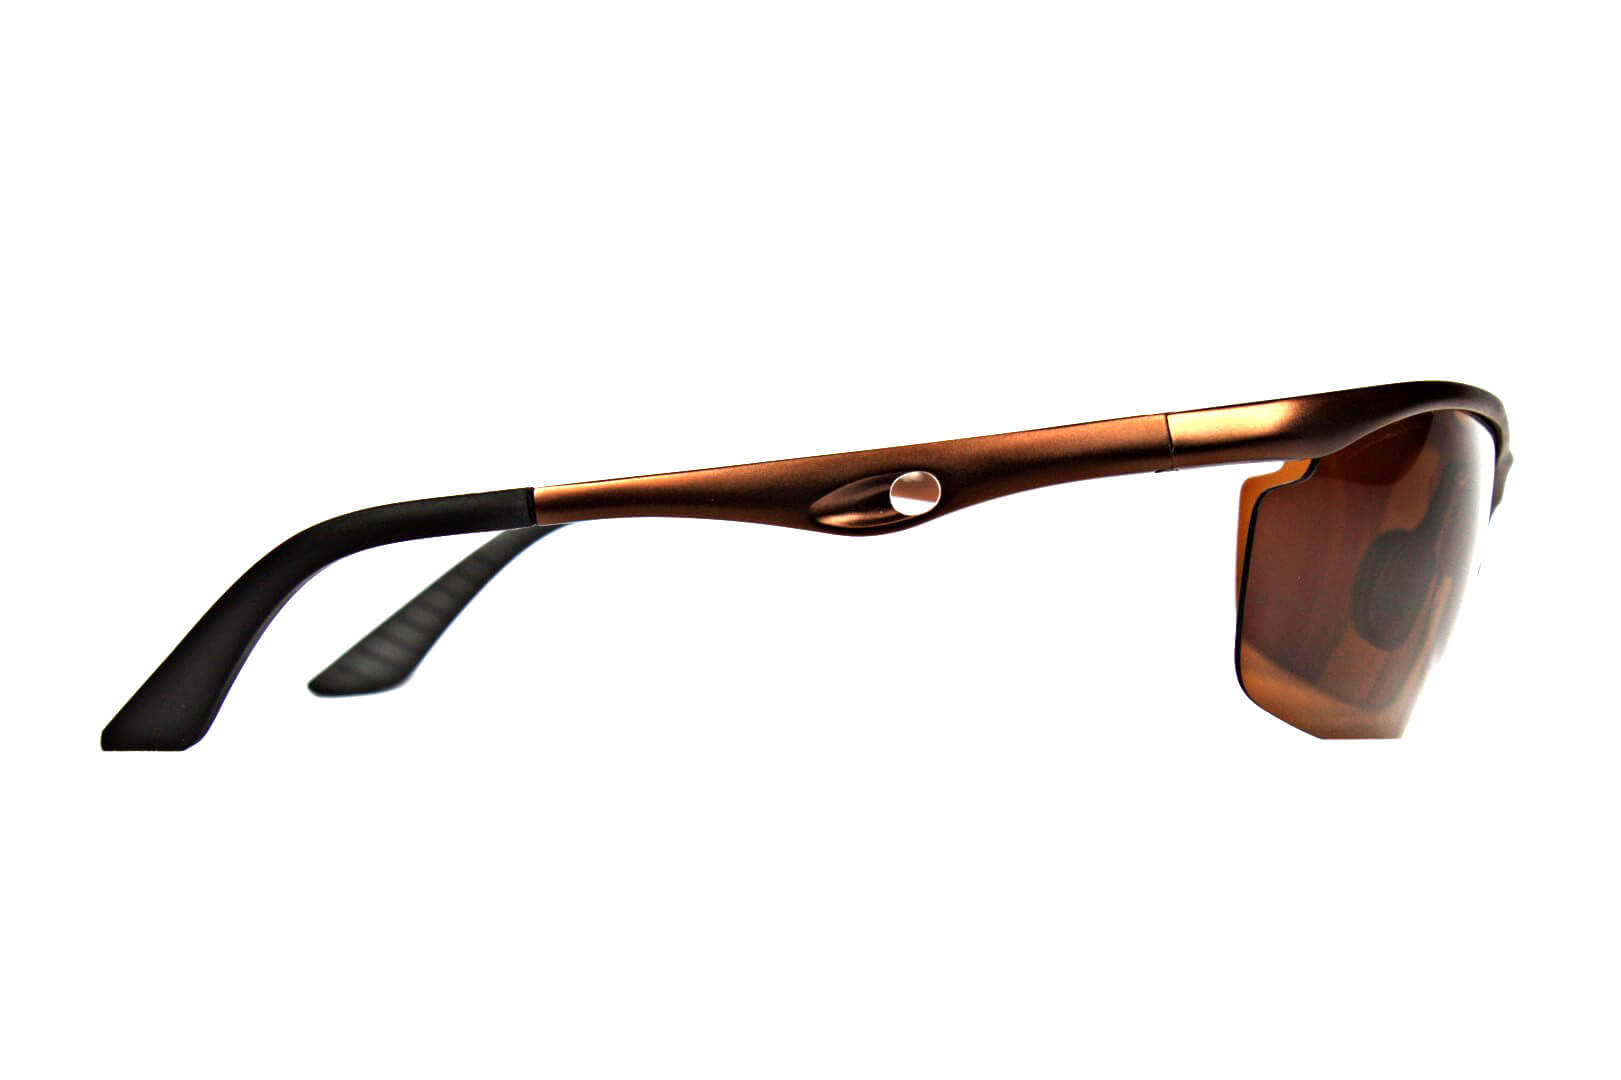 OPTOFENDY Polarized Sport Sunglasses for Men Women, India